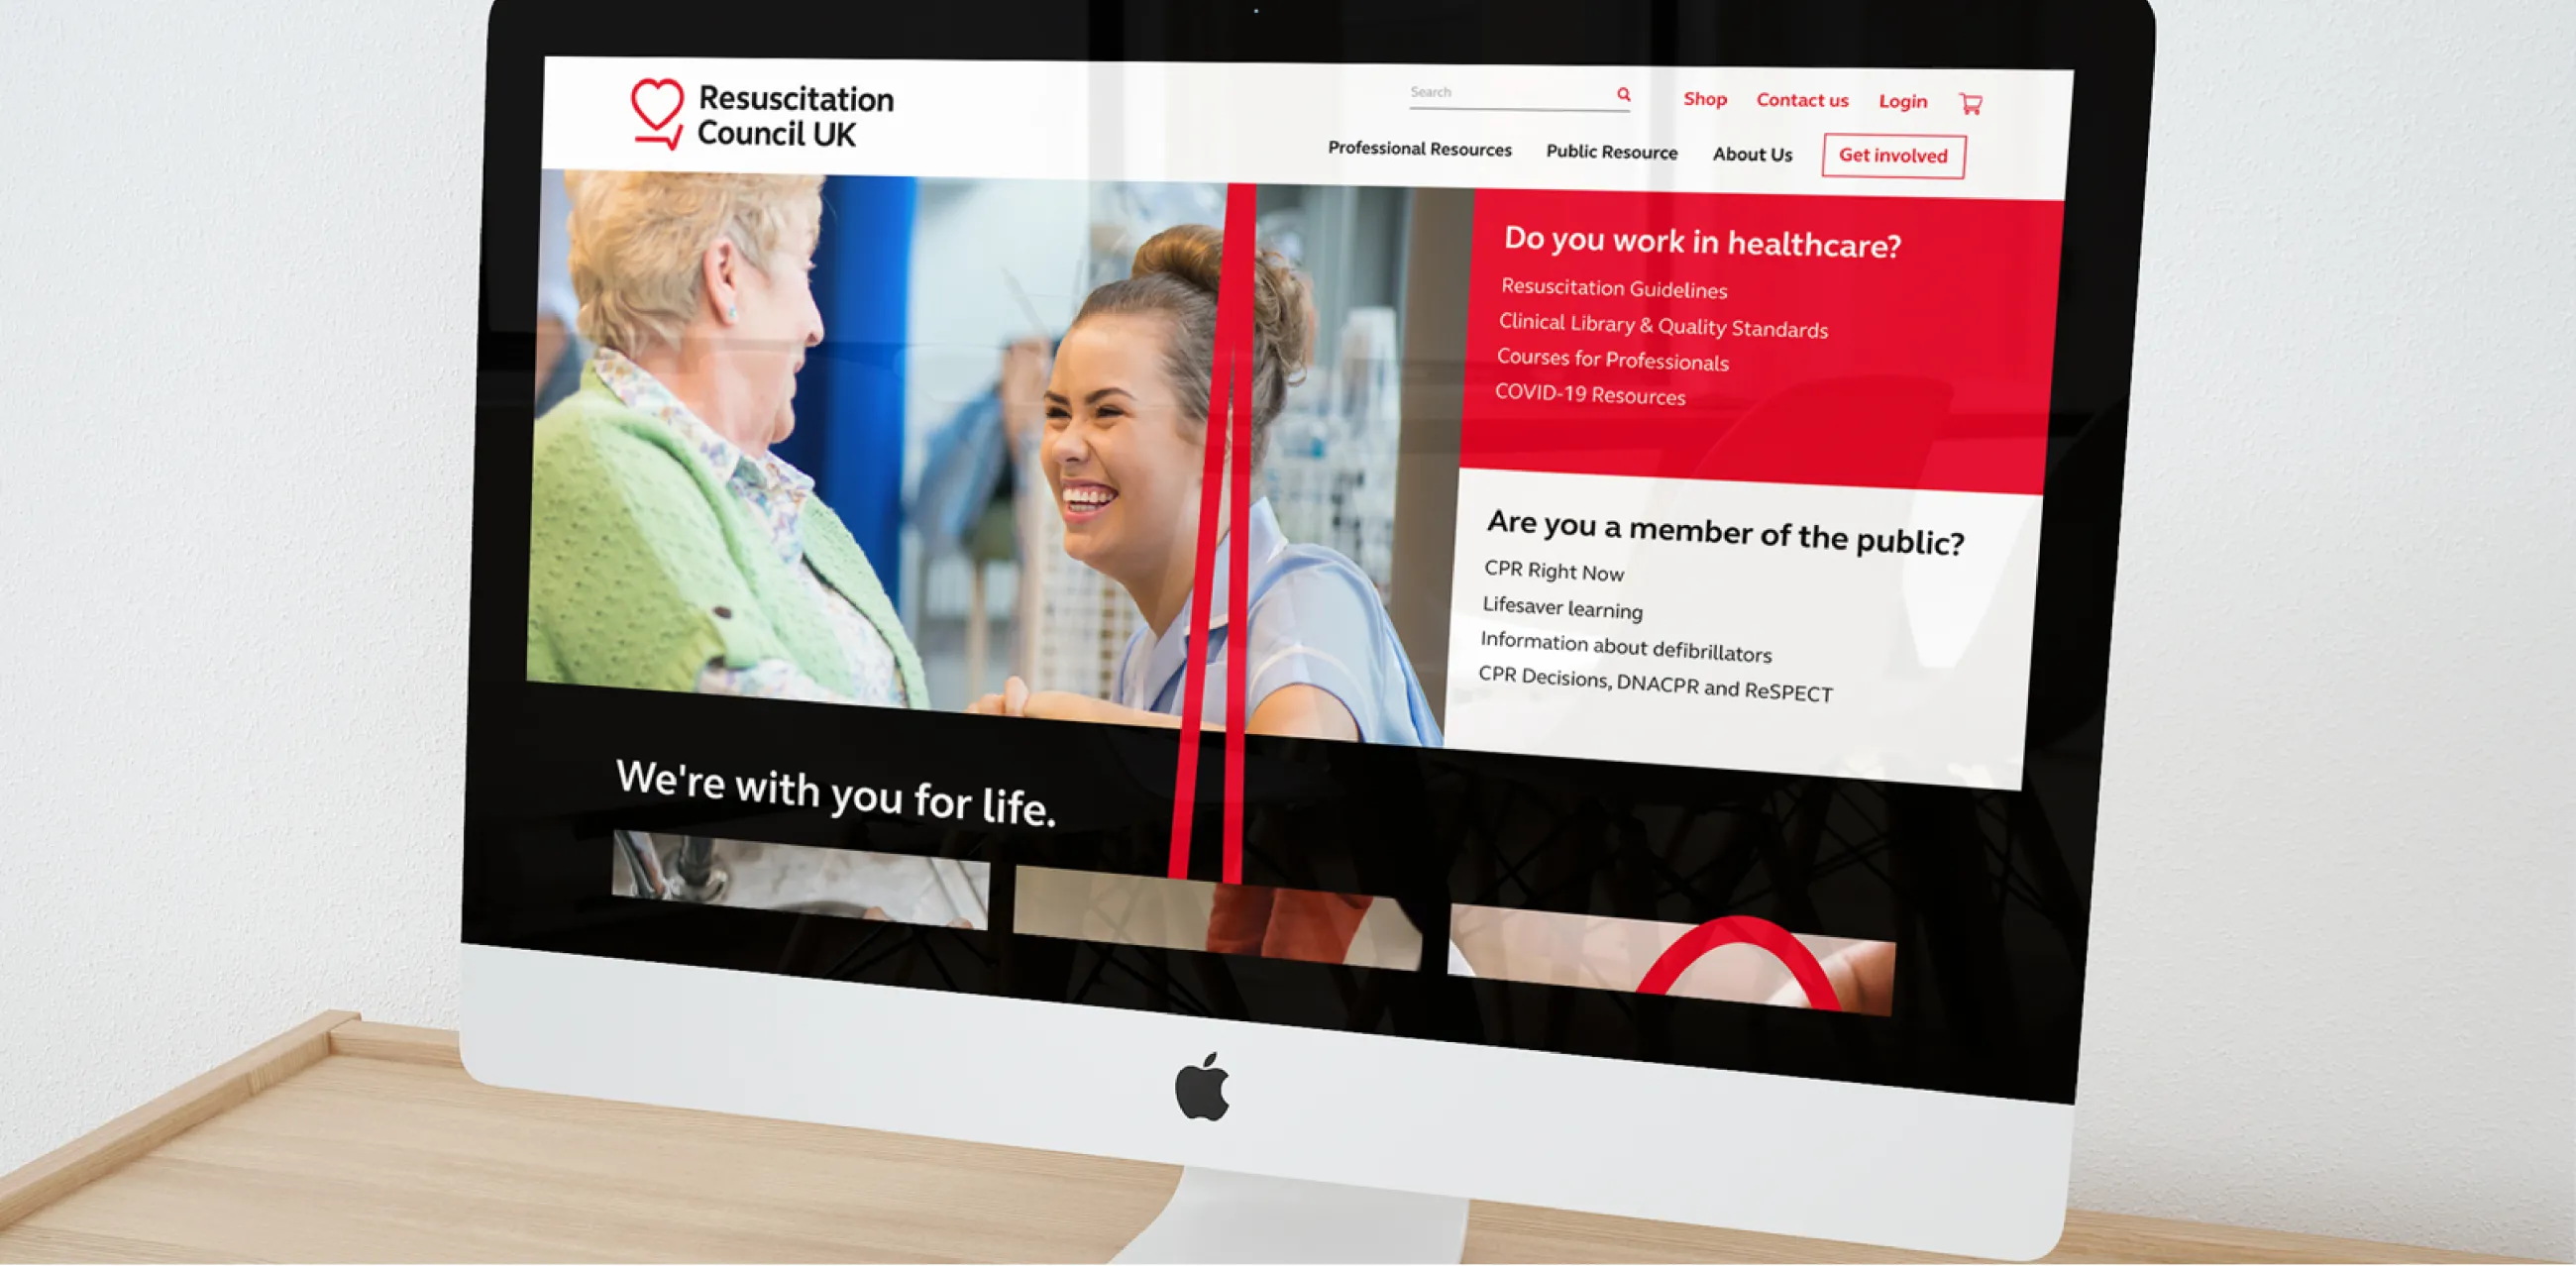 Resuscitation Council UK website shown on desktop monitor